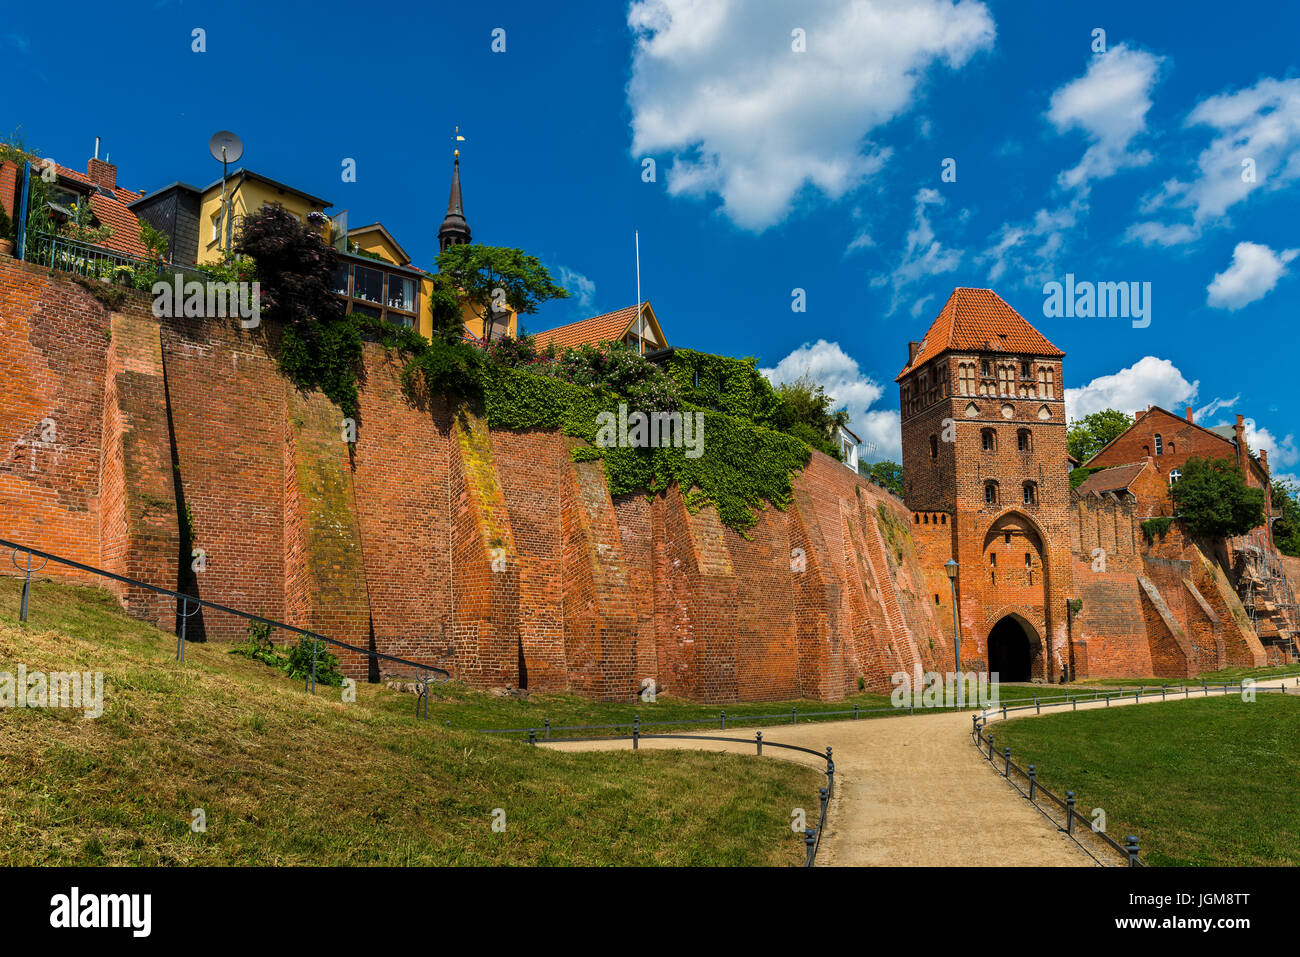 City wall and castle gate, Tangermünde, Saxony Anhalt, Germany Stock Photo